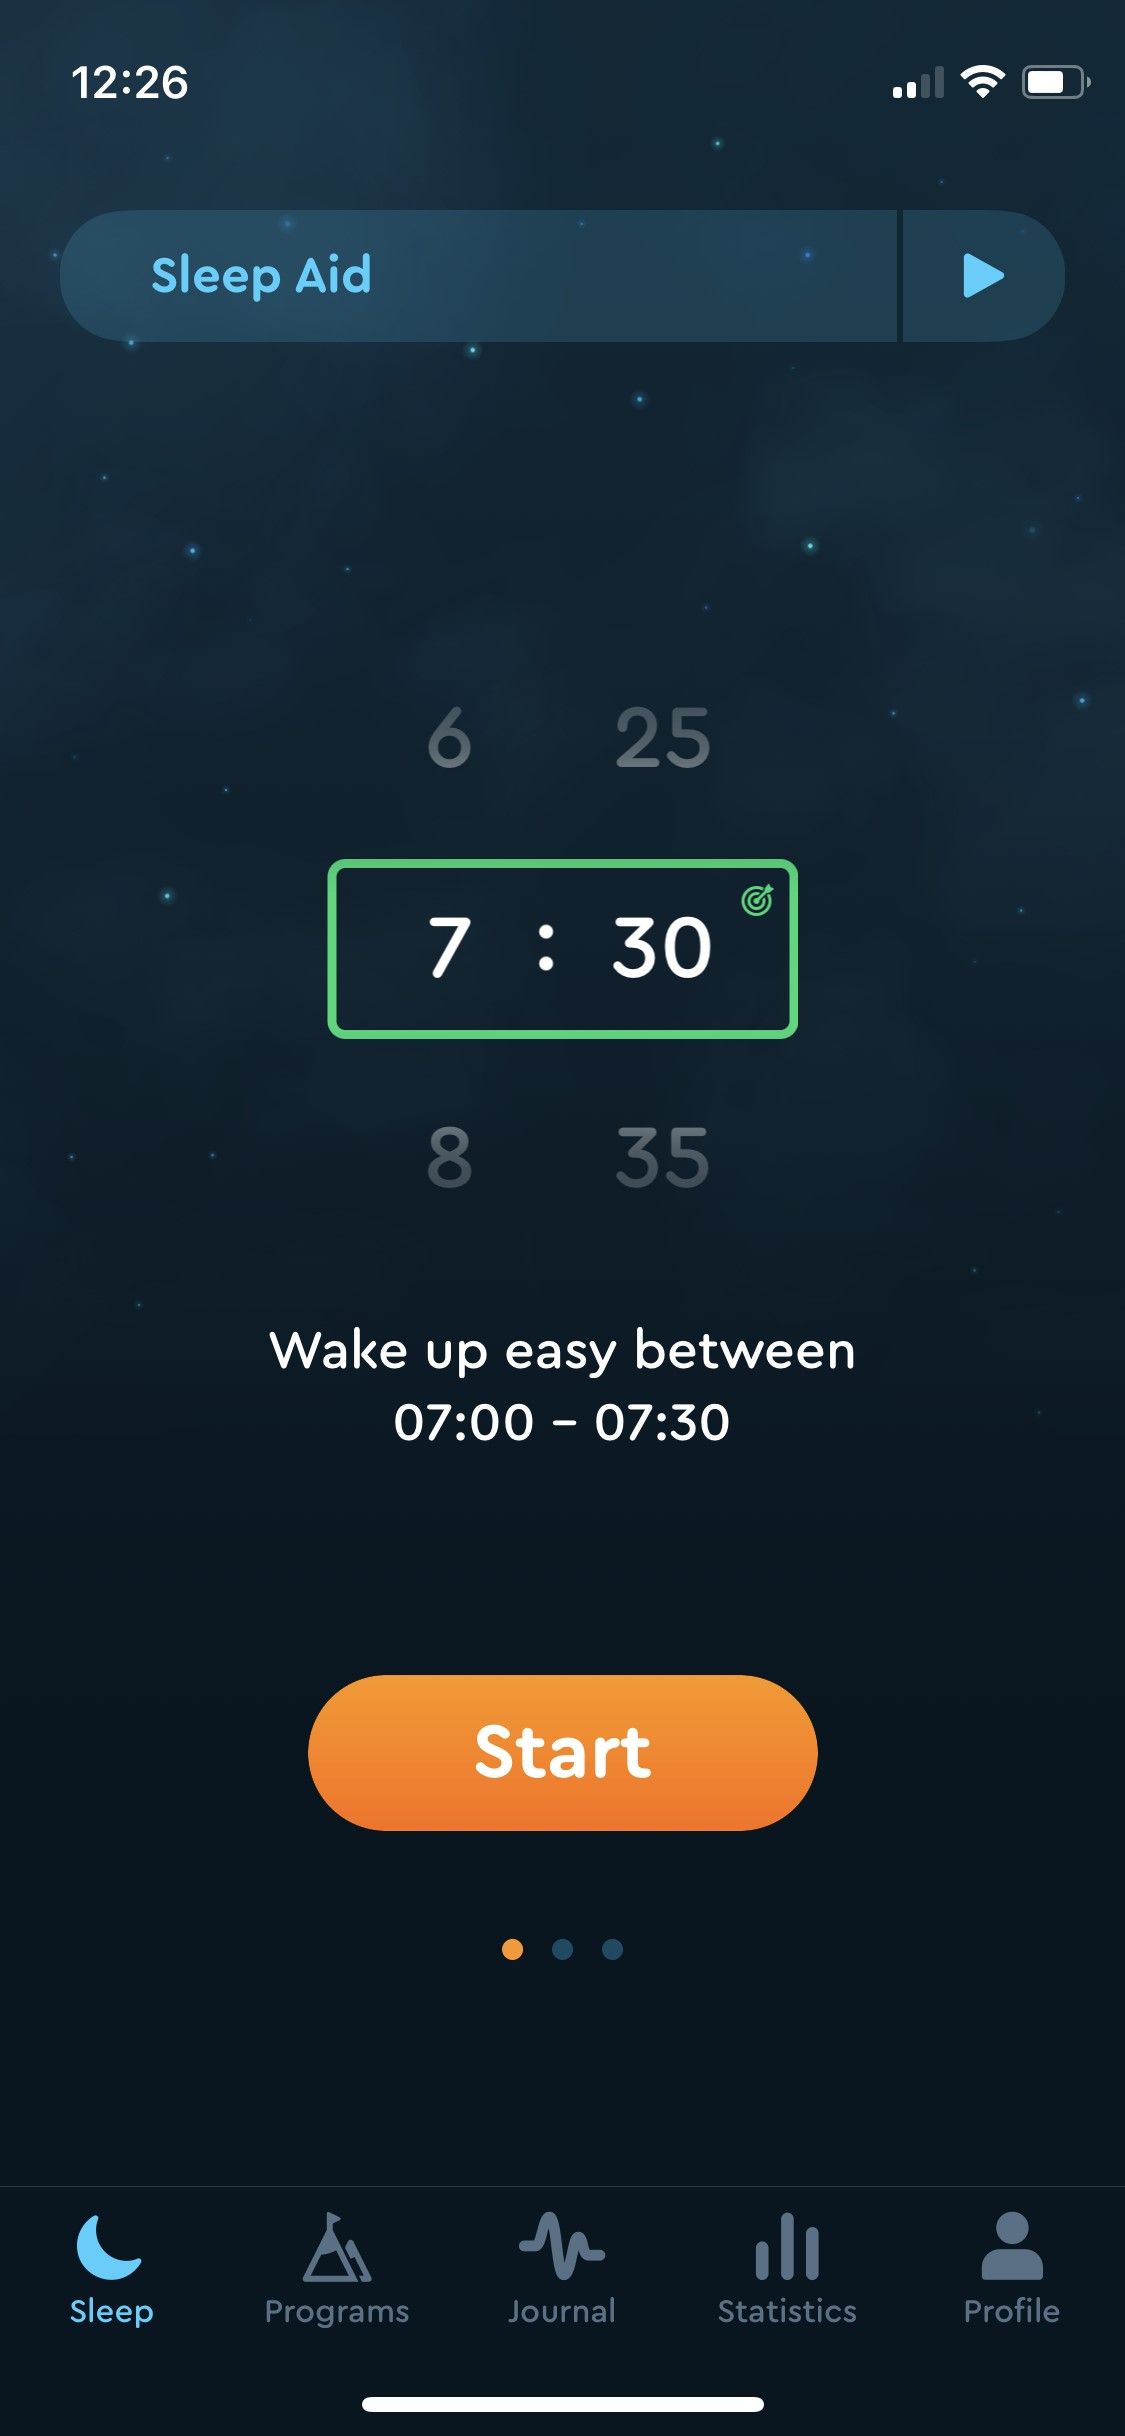 Sleep Cycle app - set sleep aid